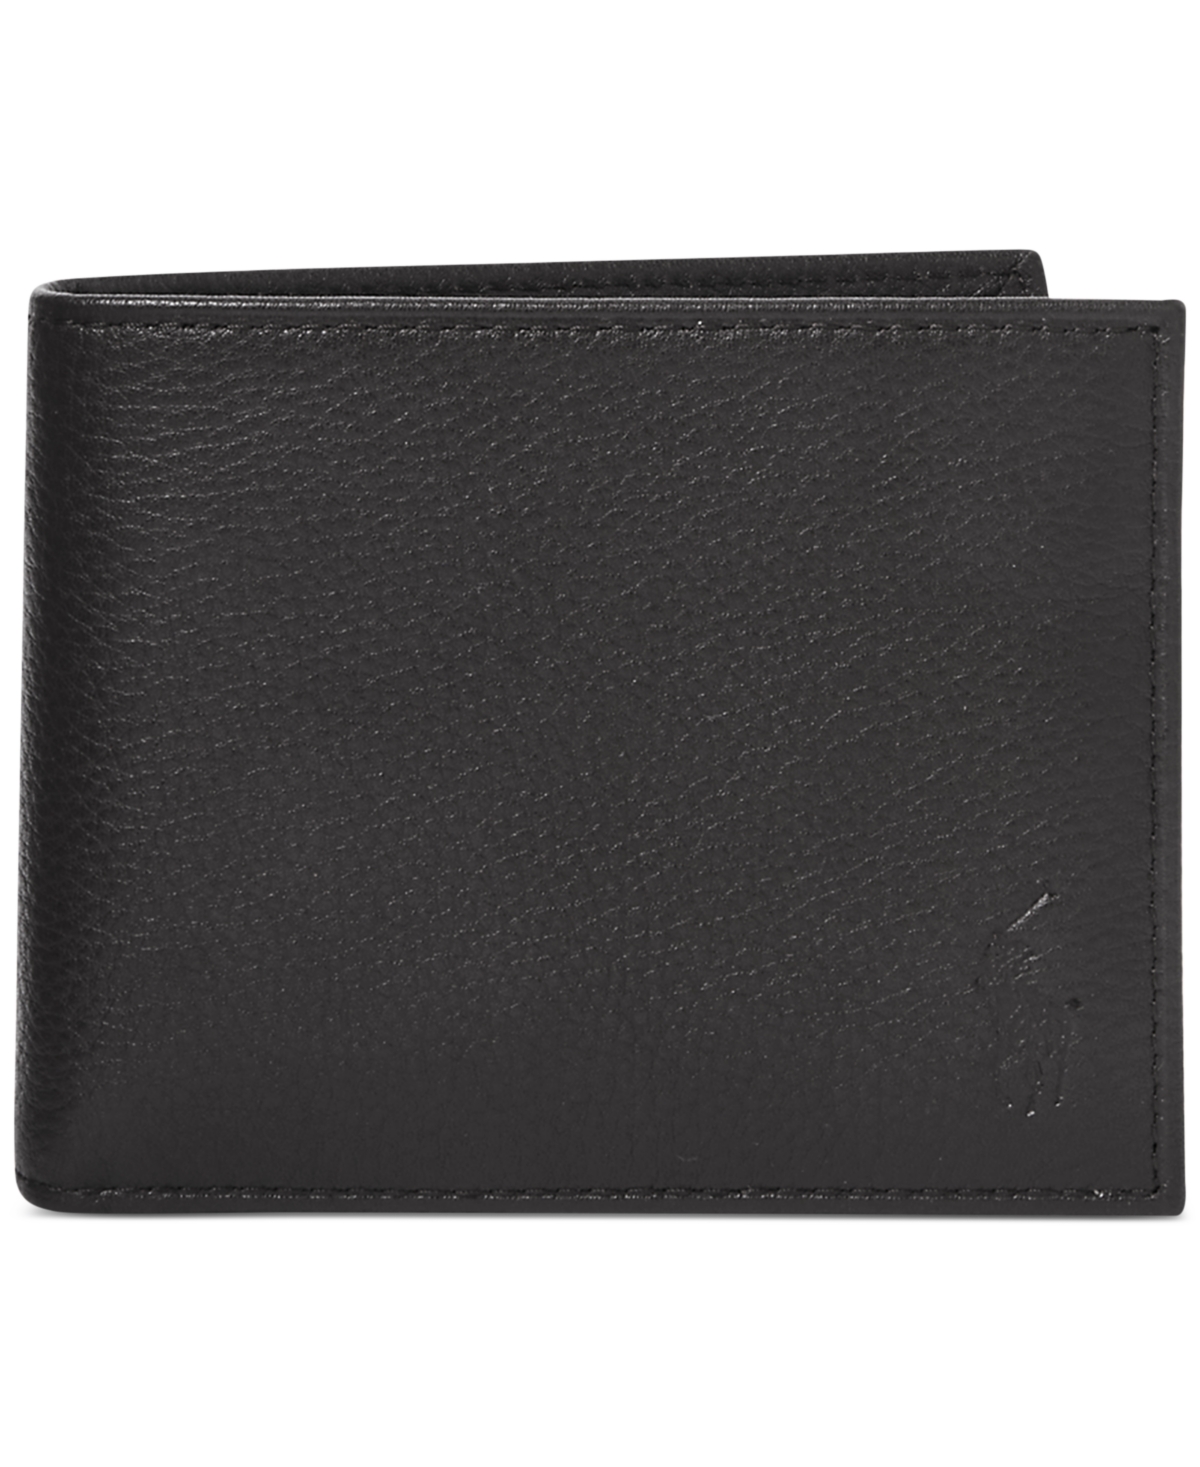 Polo Ralph Lauren Men's Pebbled Leather Passcase In Black